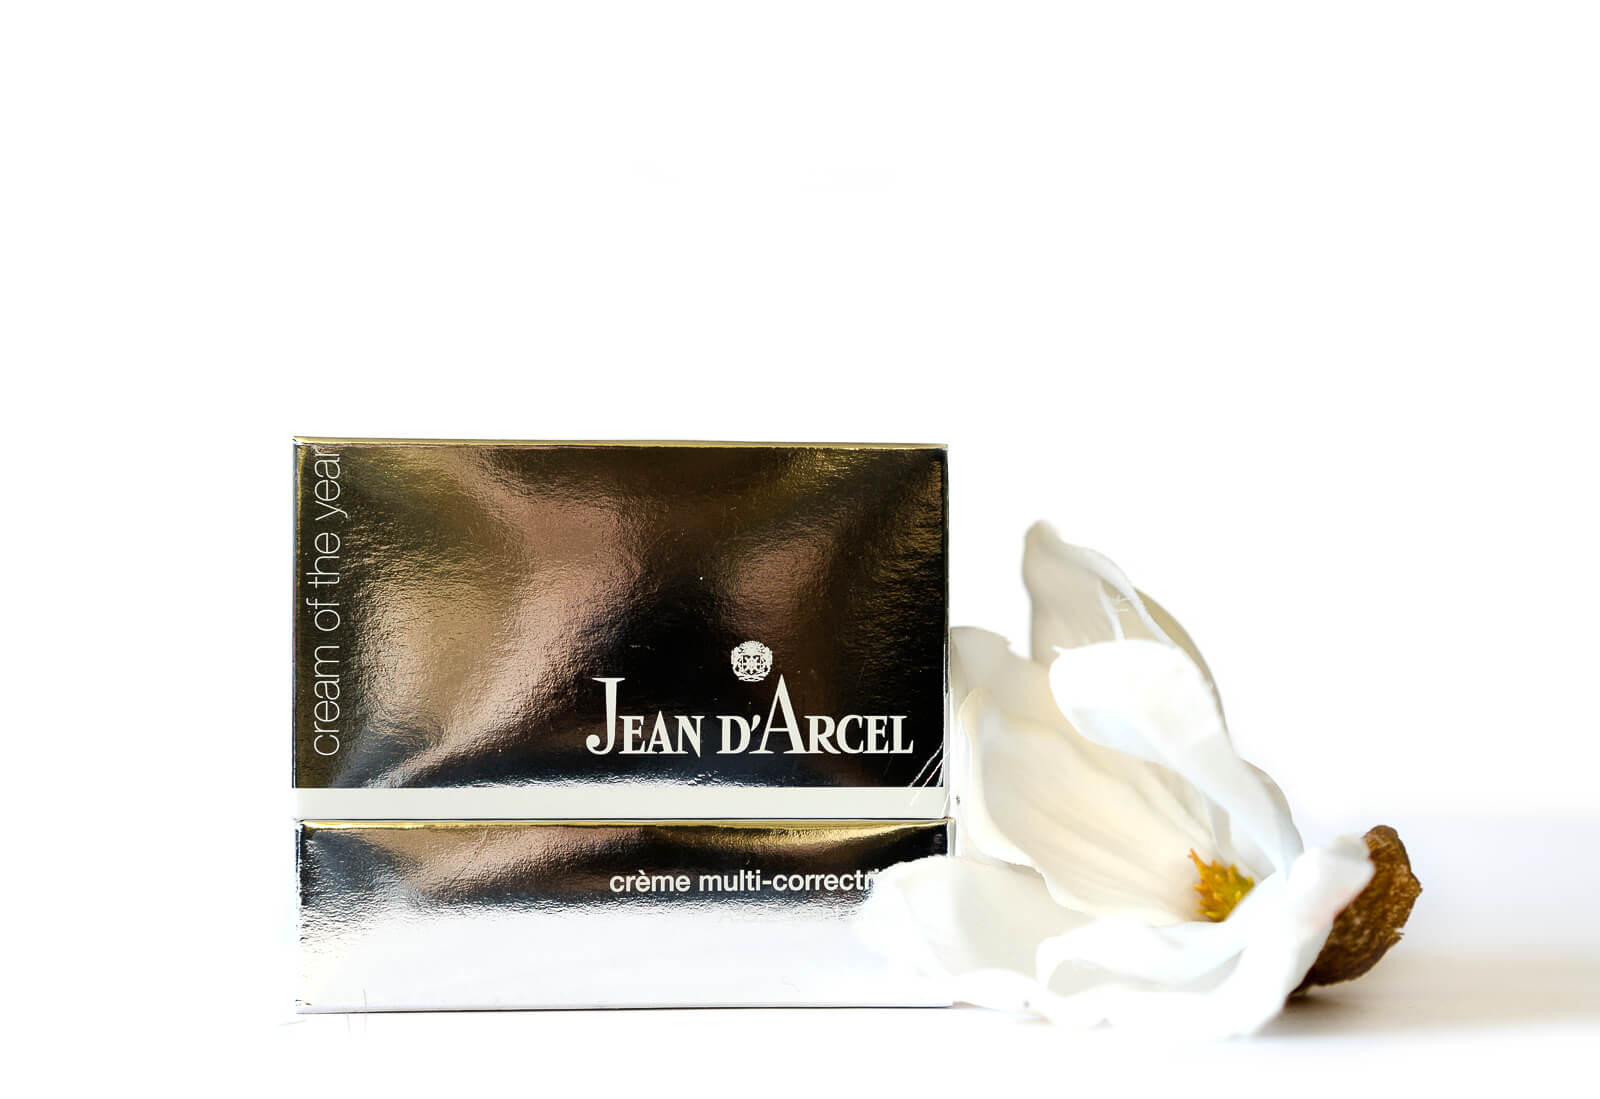 Cream of the year - Crème Multi-Correctrice von JEAN D’ARCEL